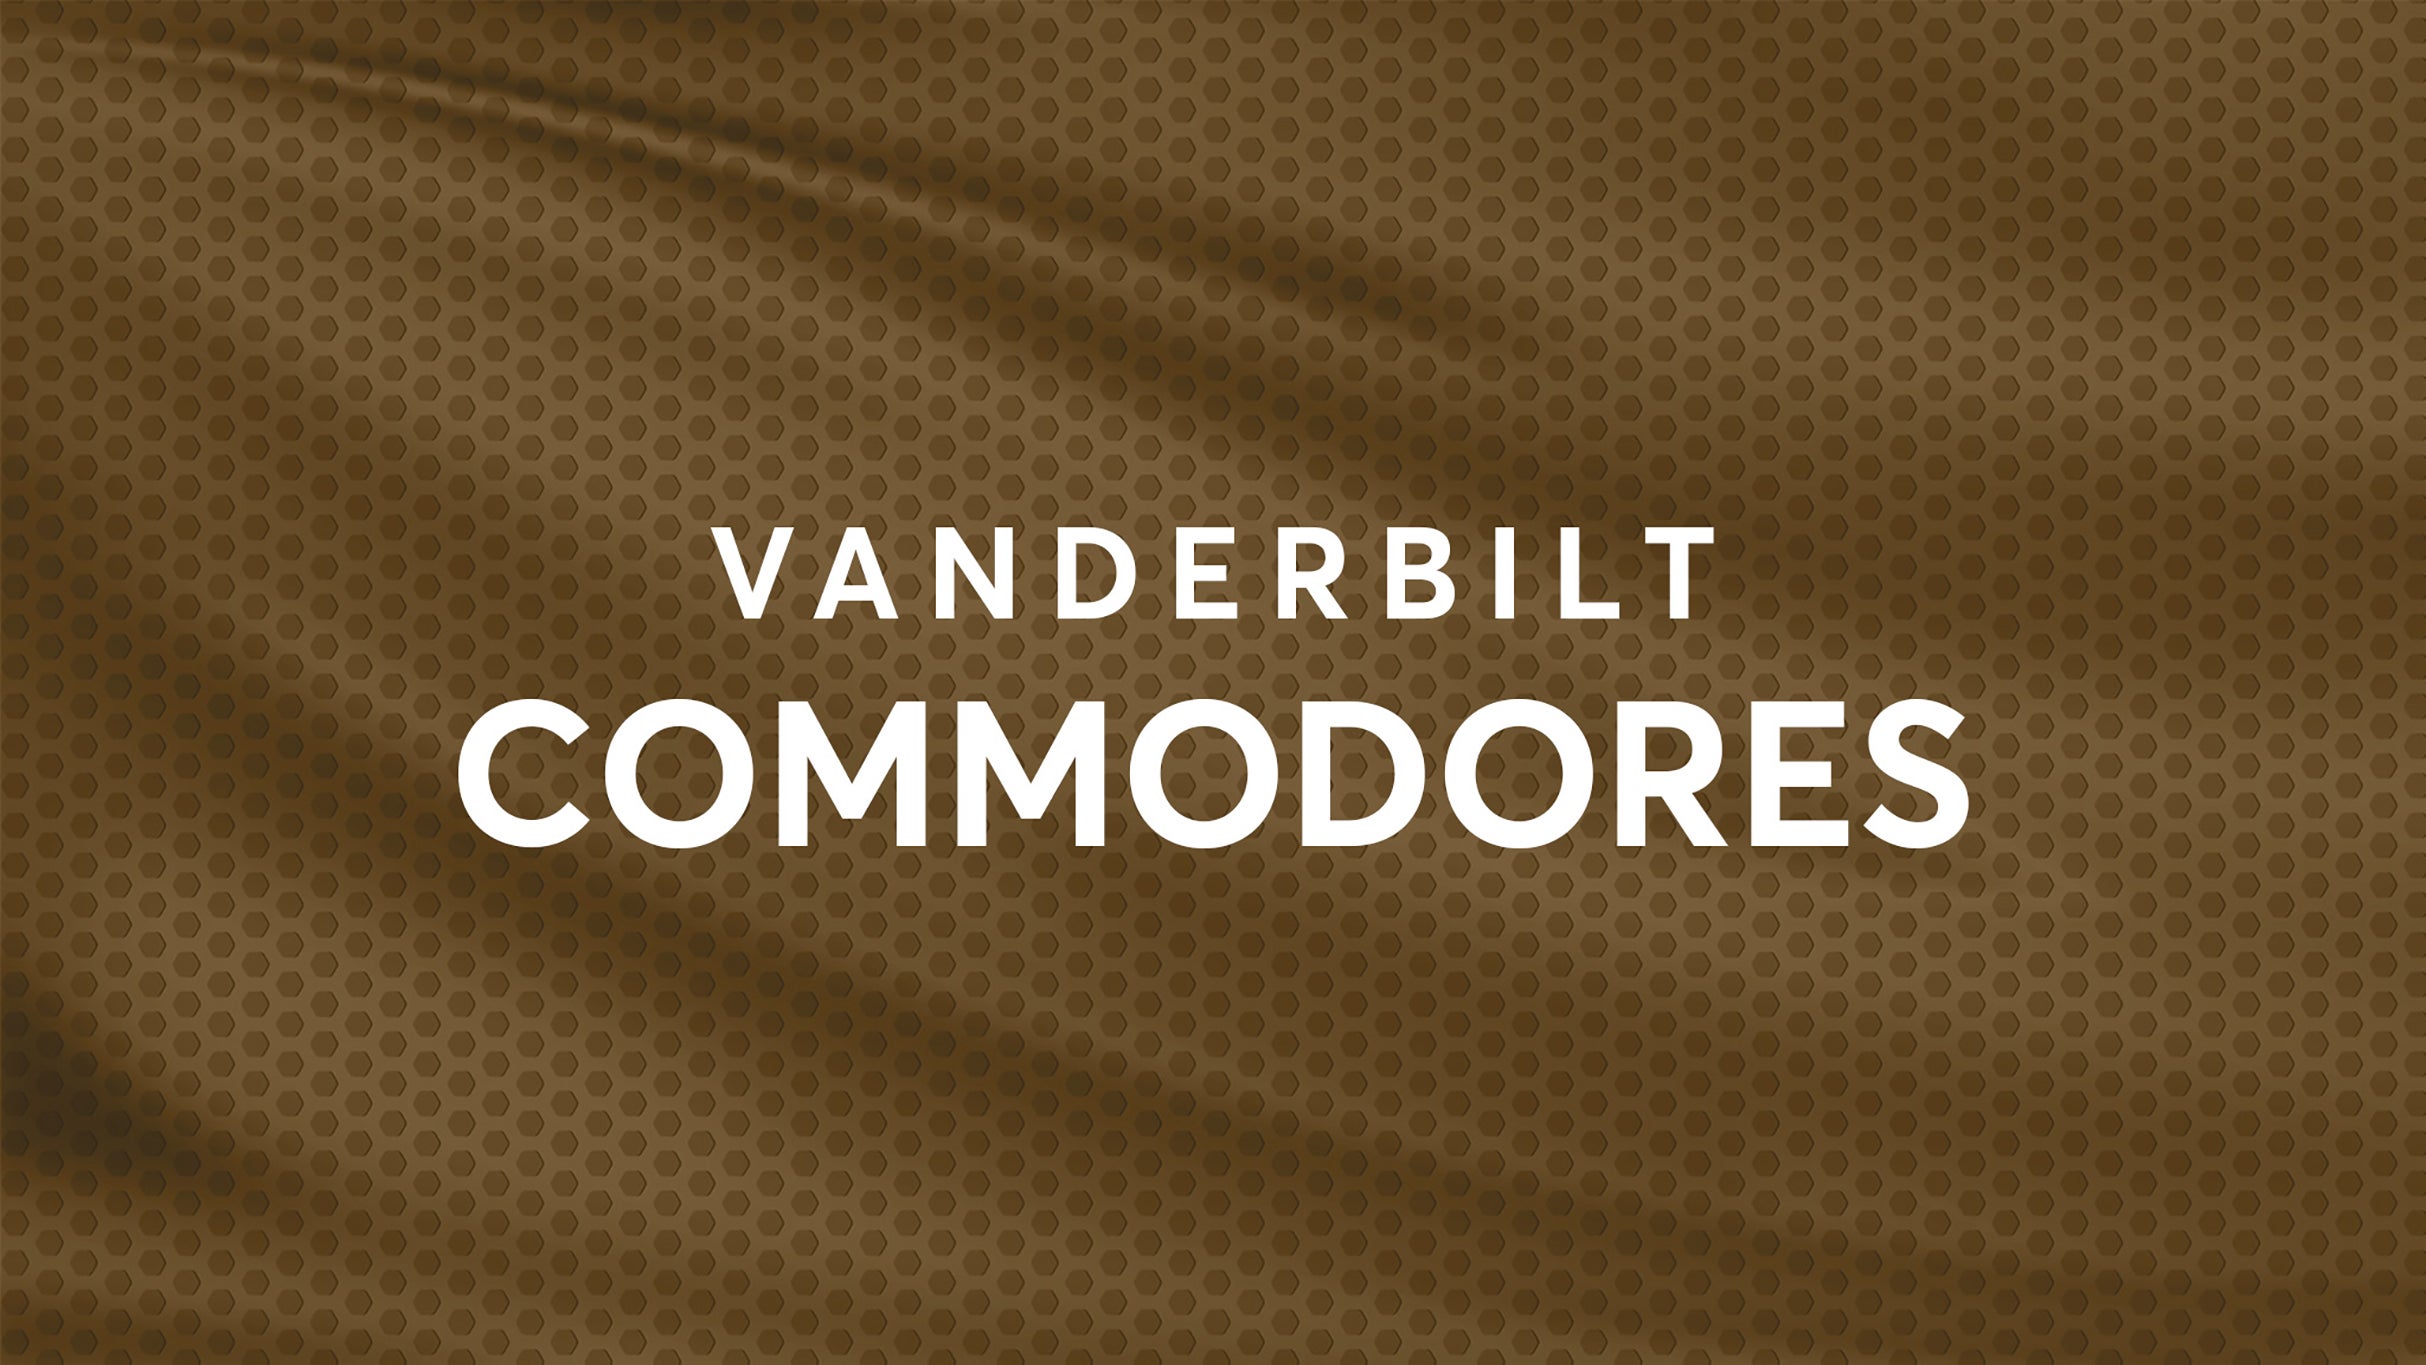 Vanderbilt Commodores Football vs. South Carolina Gamecocks Football hero